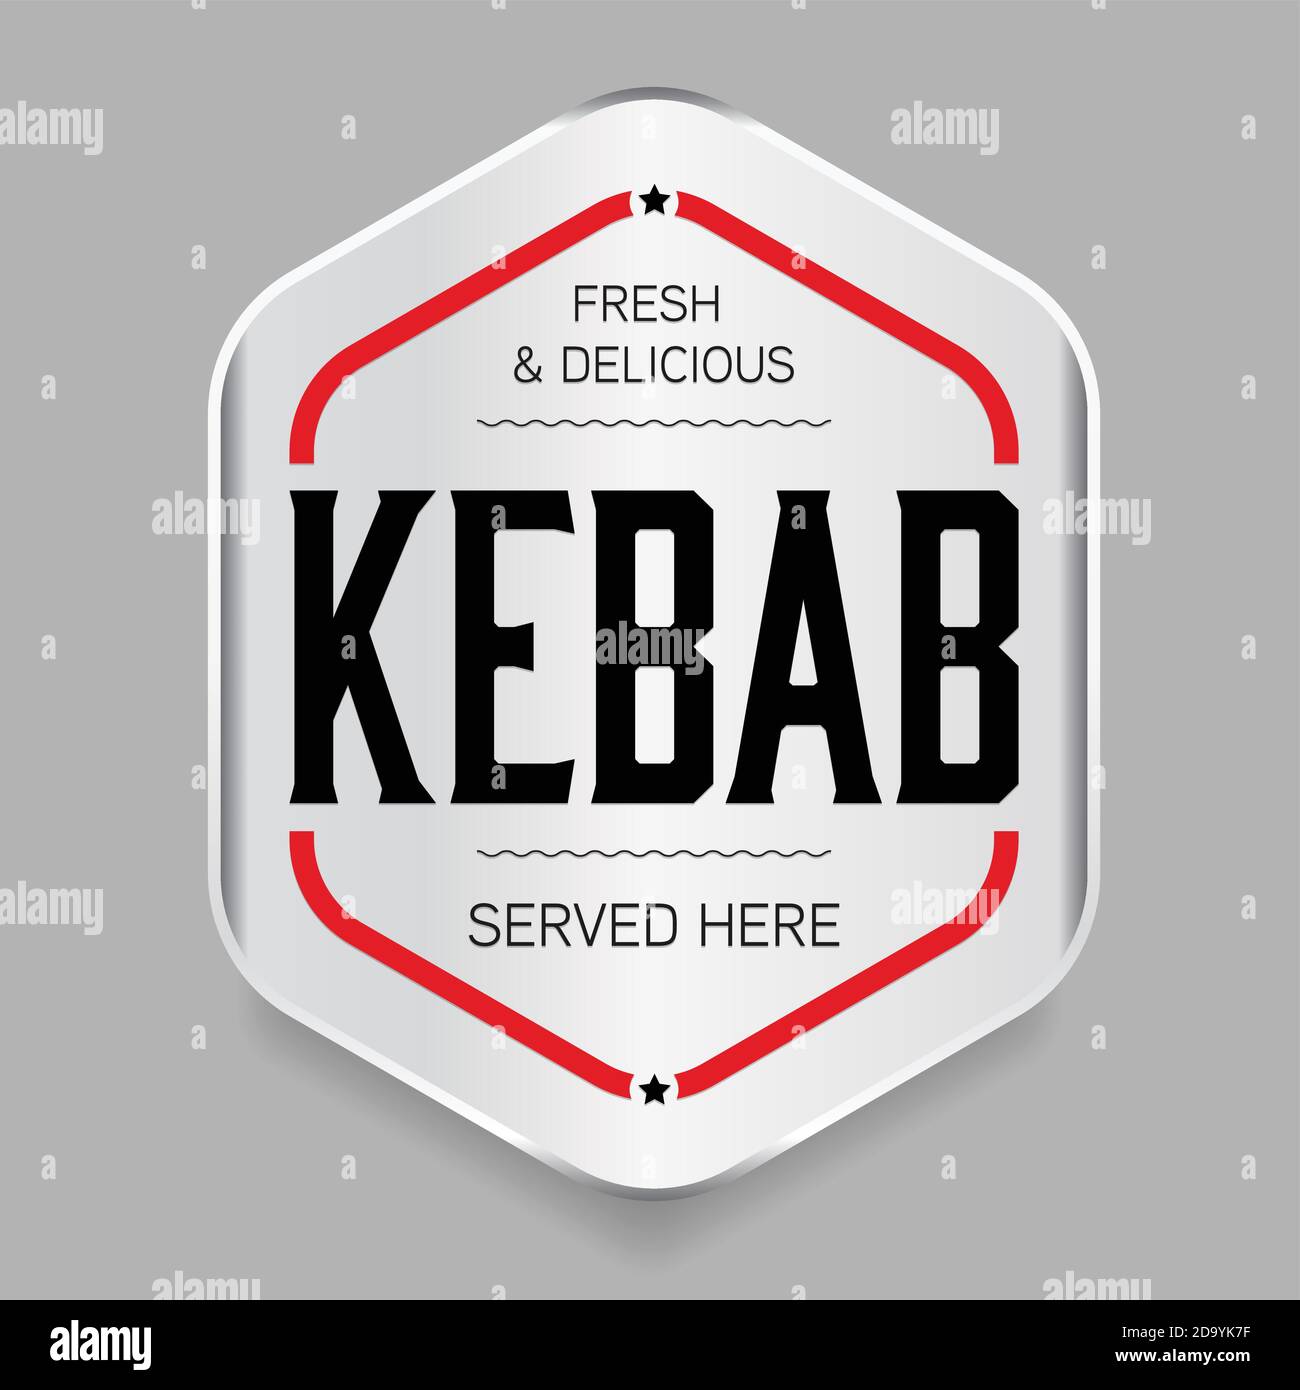 Fresh Kebab stamp sign badge vintage Stock Vector